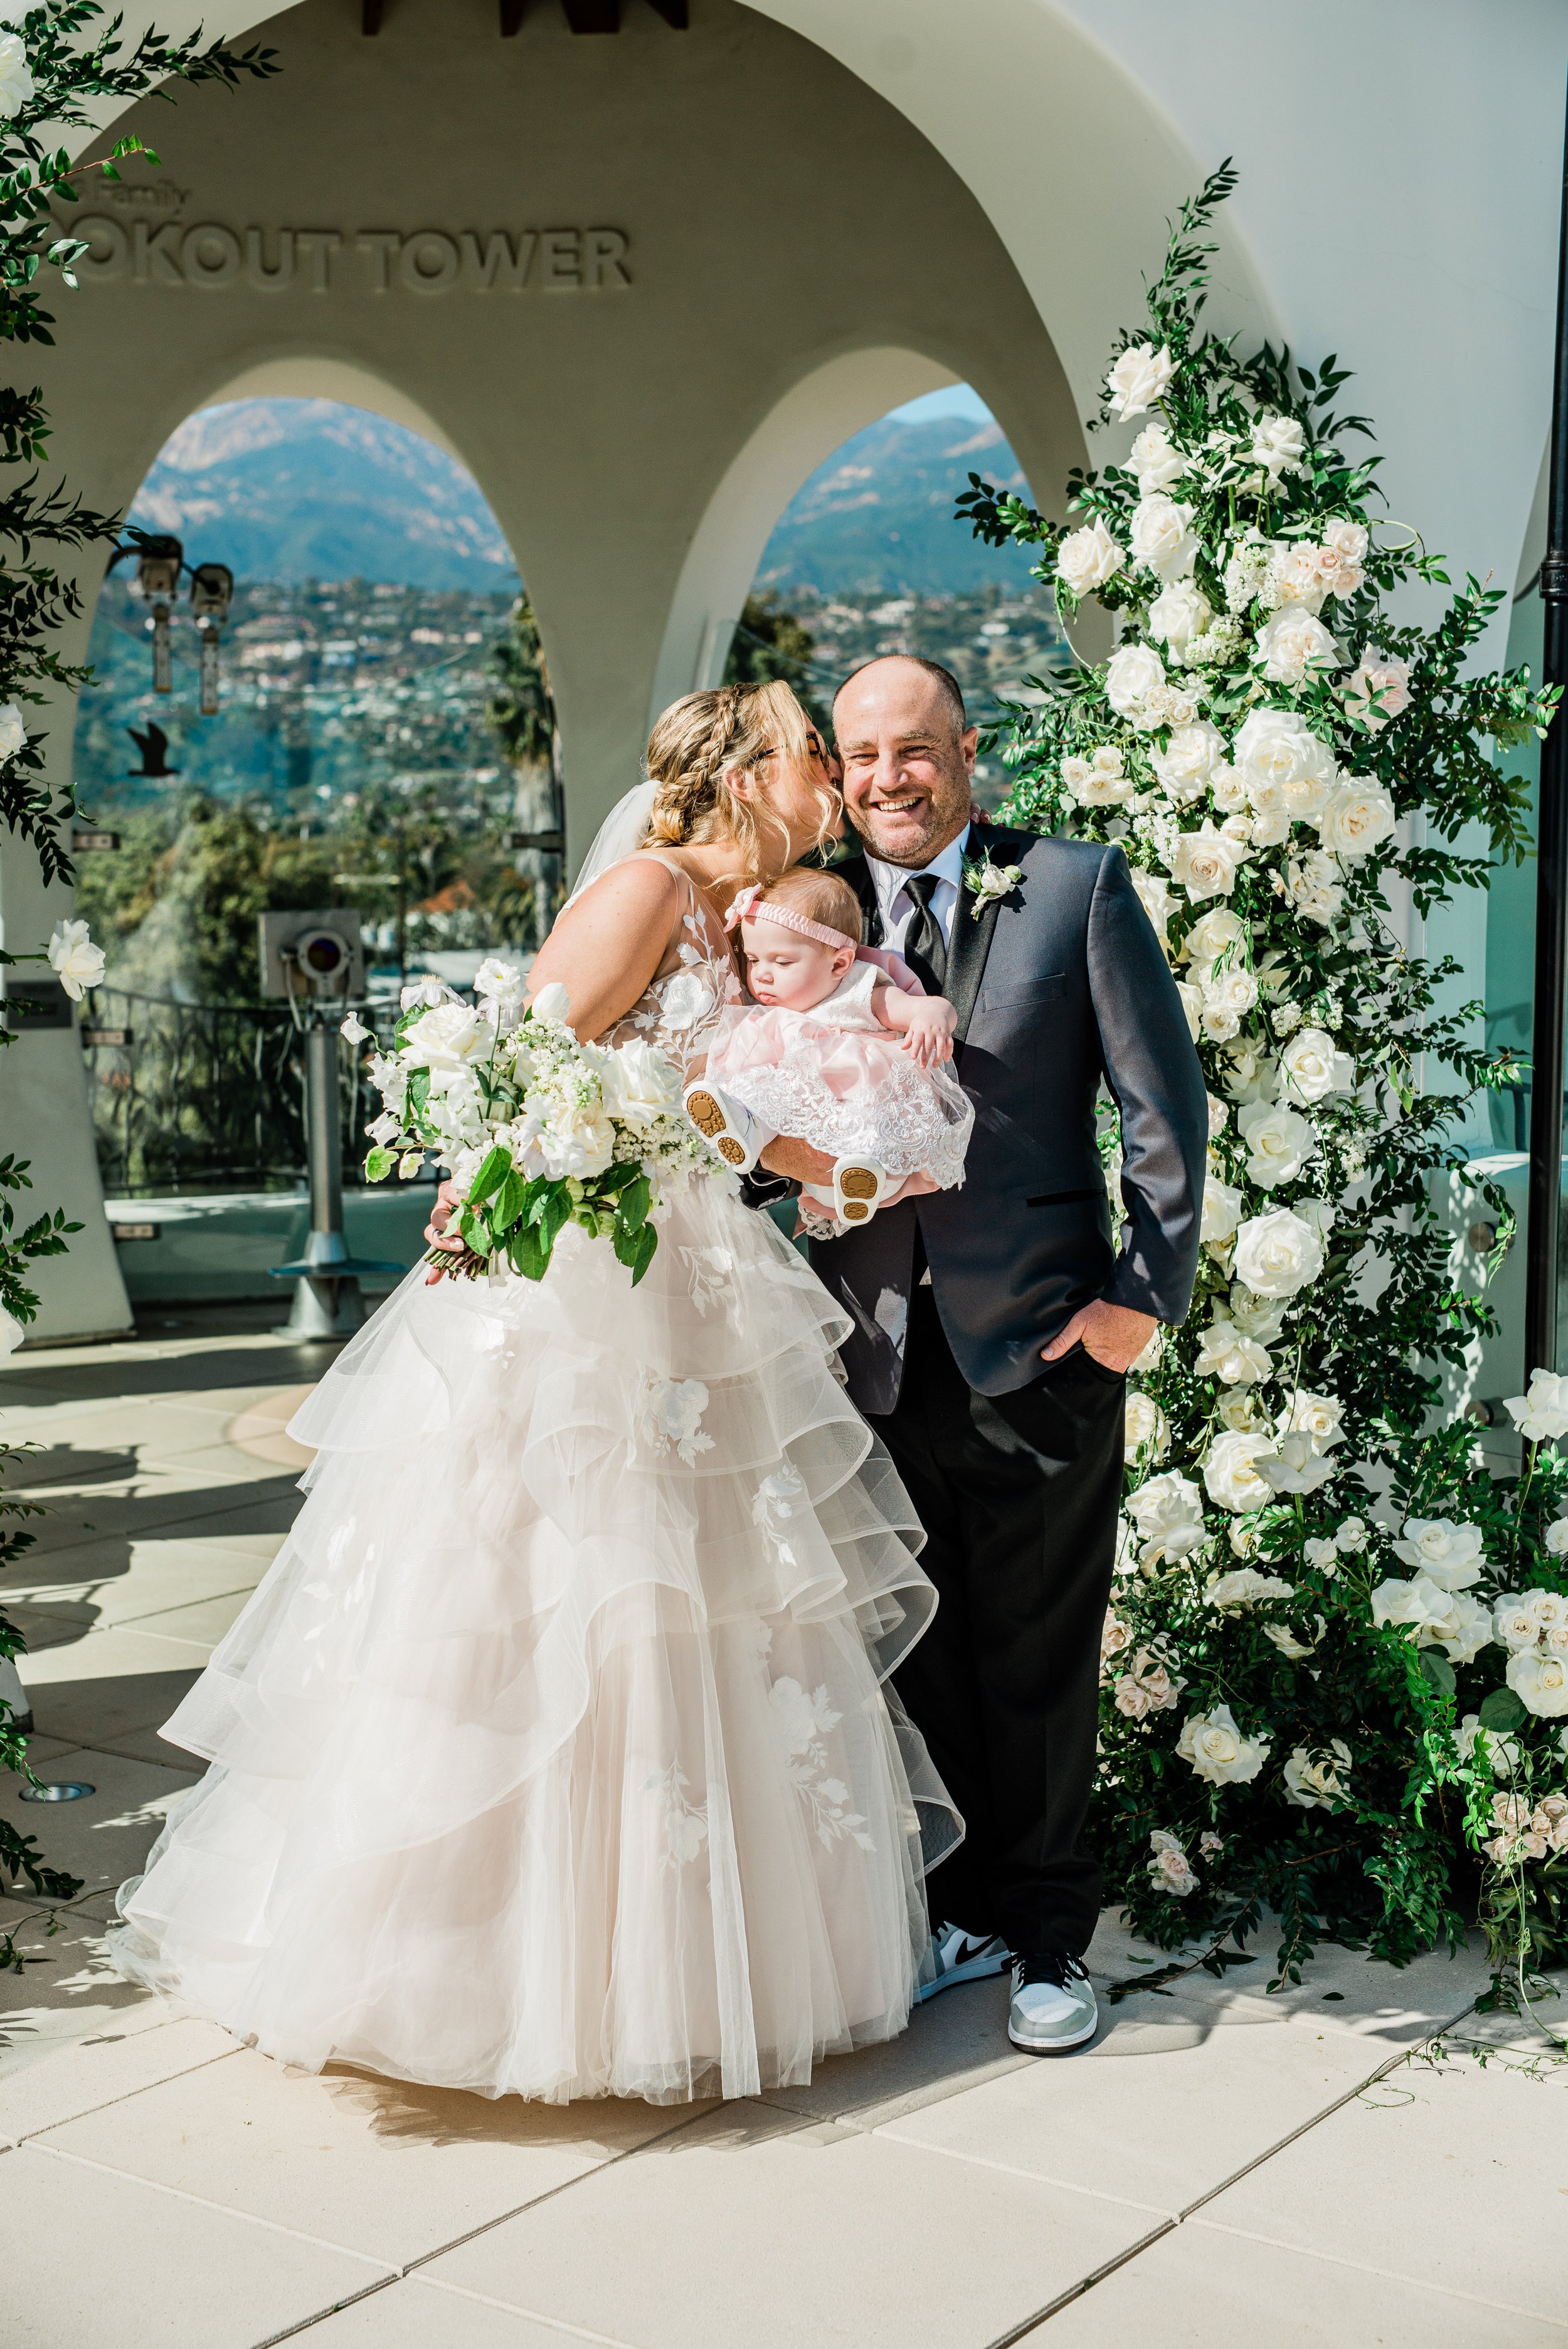 www.santabarbarawedding.com | Leana Myra | The MOXI | Drake Social | Blooms of Santa Barbara | Dreamcatcher Artistry | Couple with Their Daughter at Ceremony